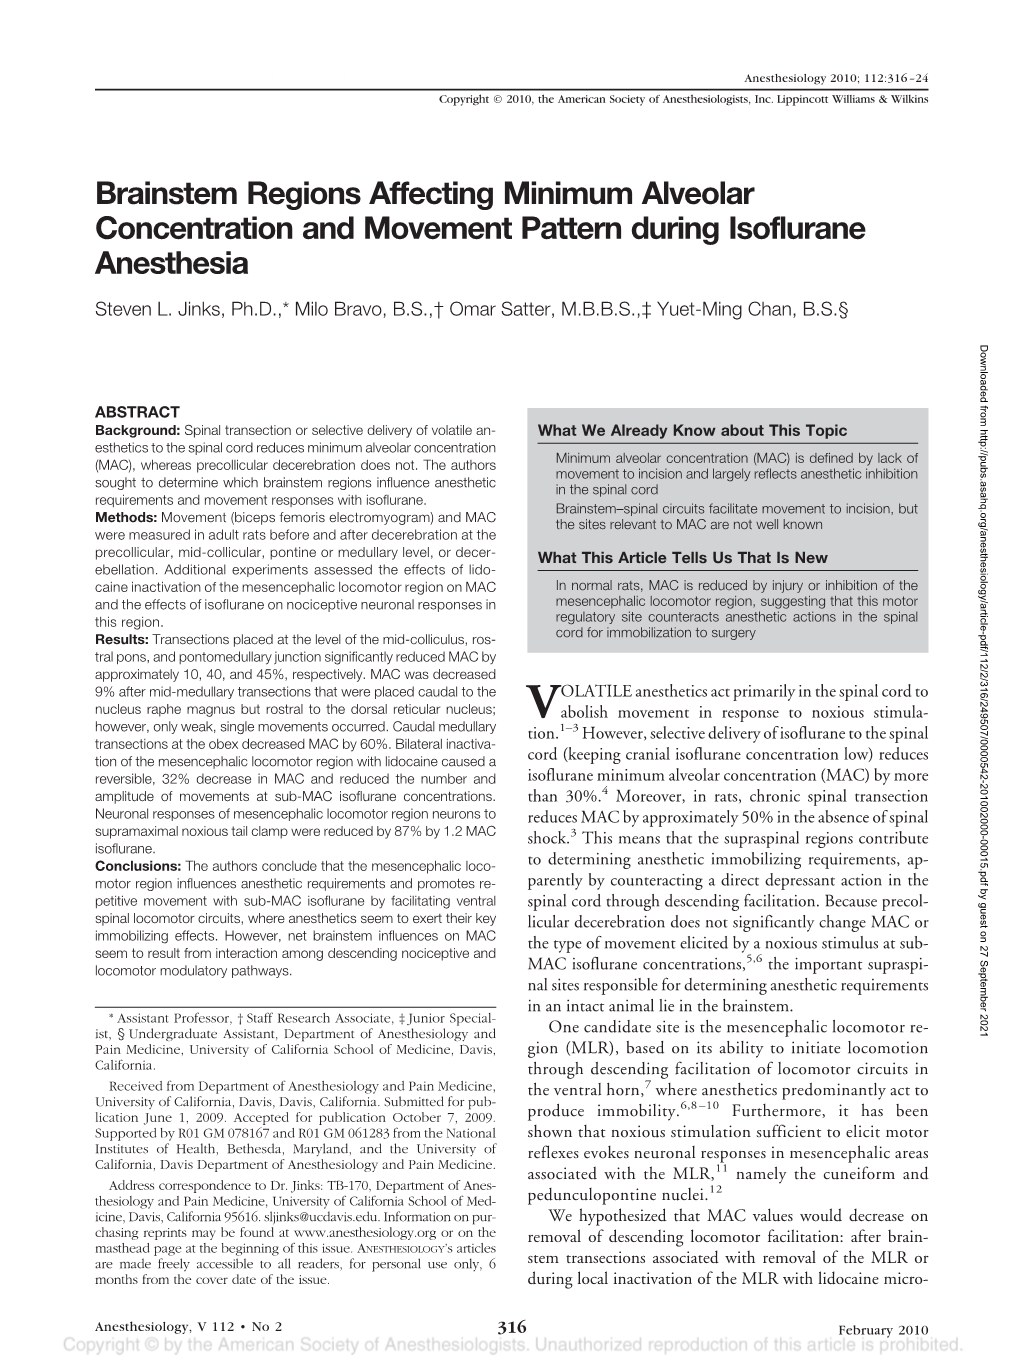 Brainstem Regions Affecting Minimum Alveolar Concentration and Movement Pattern During Isoflurane Anesthesia